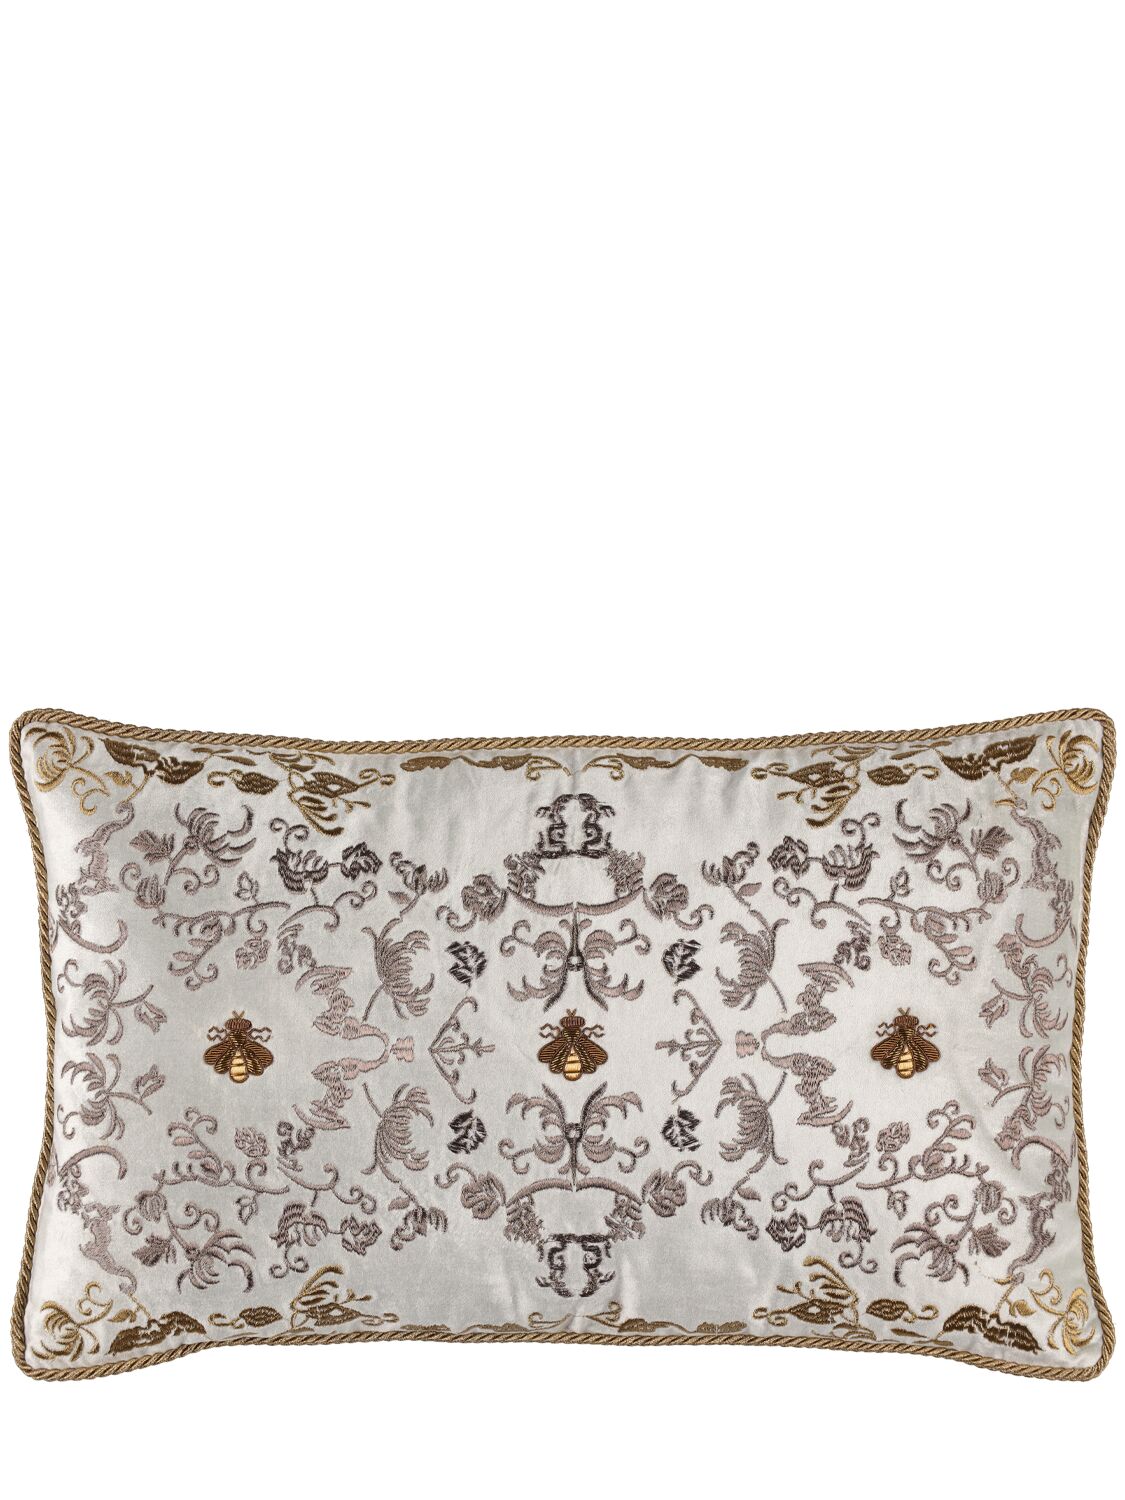 Les Ottomans Embroidered Velvet Cushion In Neutral